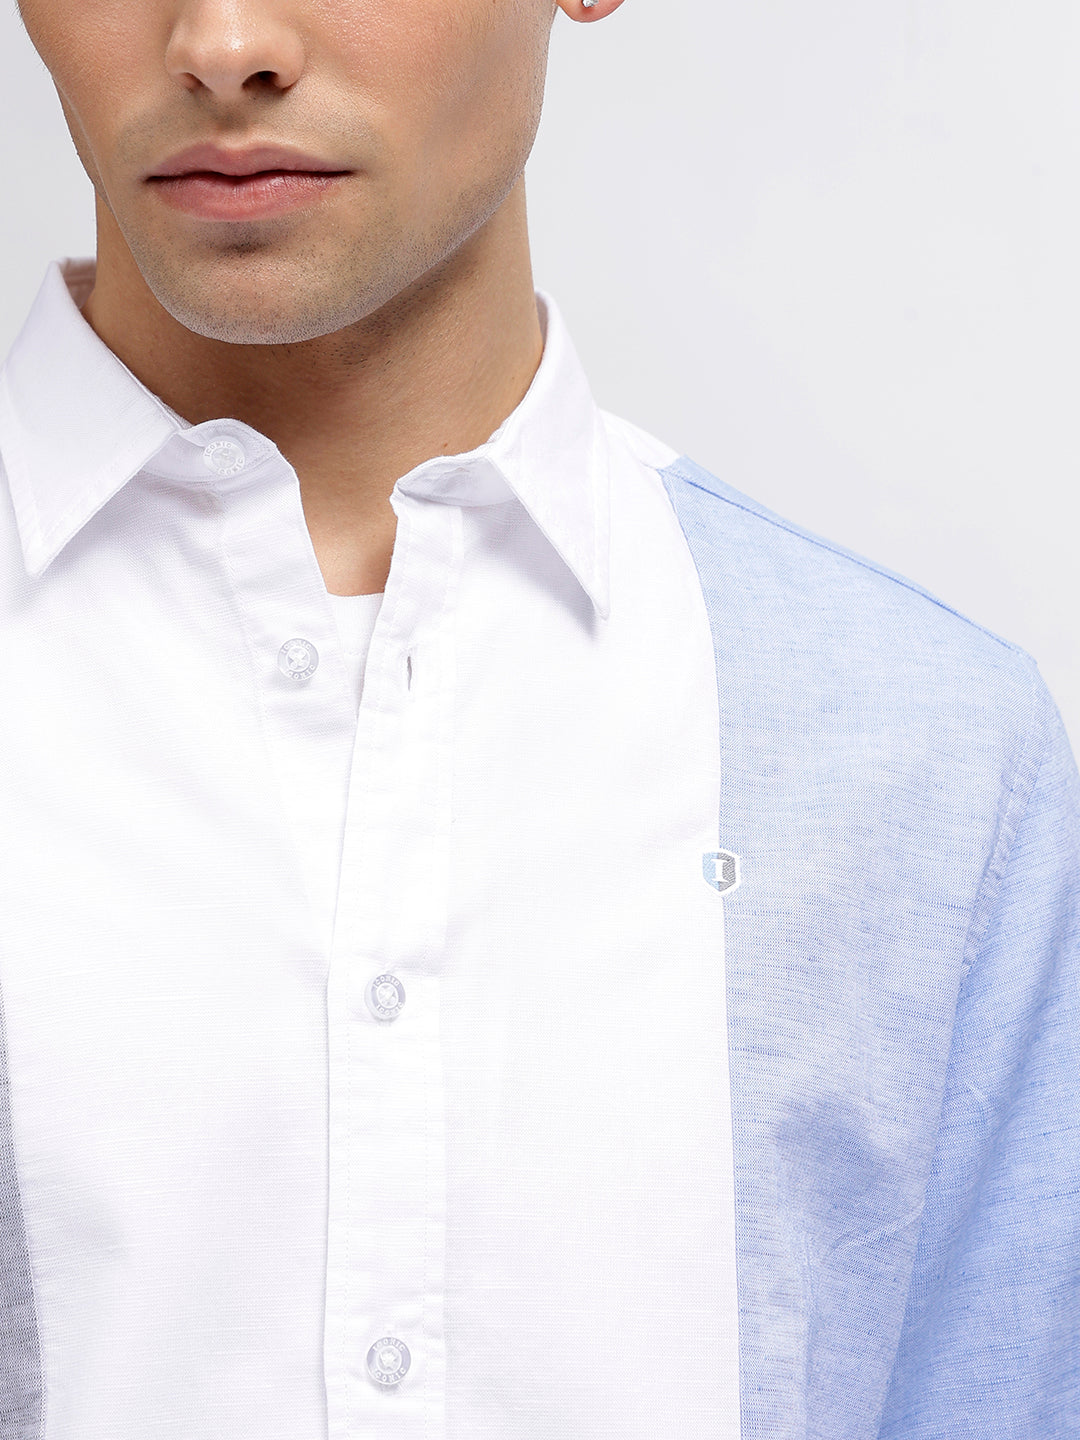 Iconic Men Multi Colour Blocked Spread Collar Full Sleeves Shirt